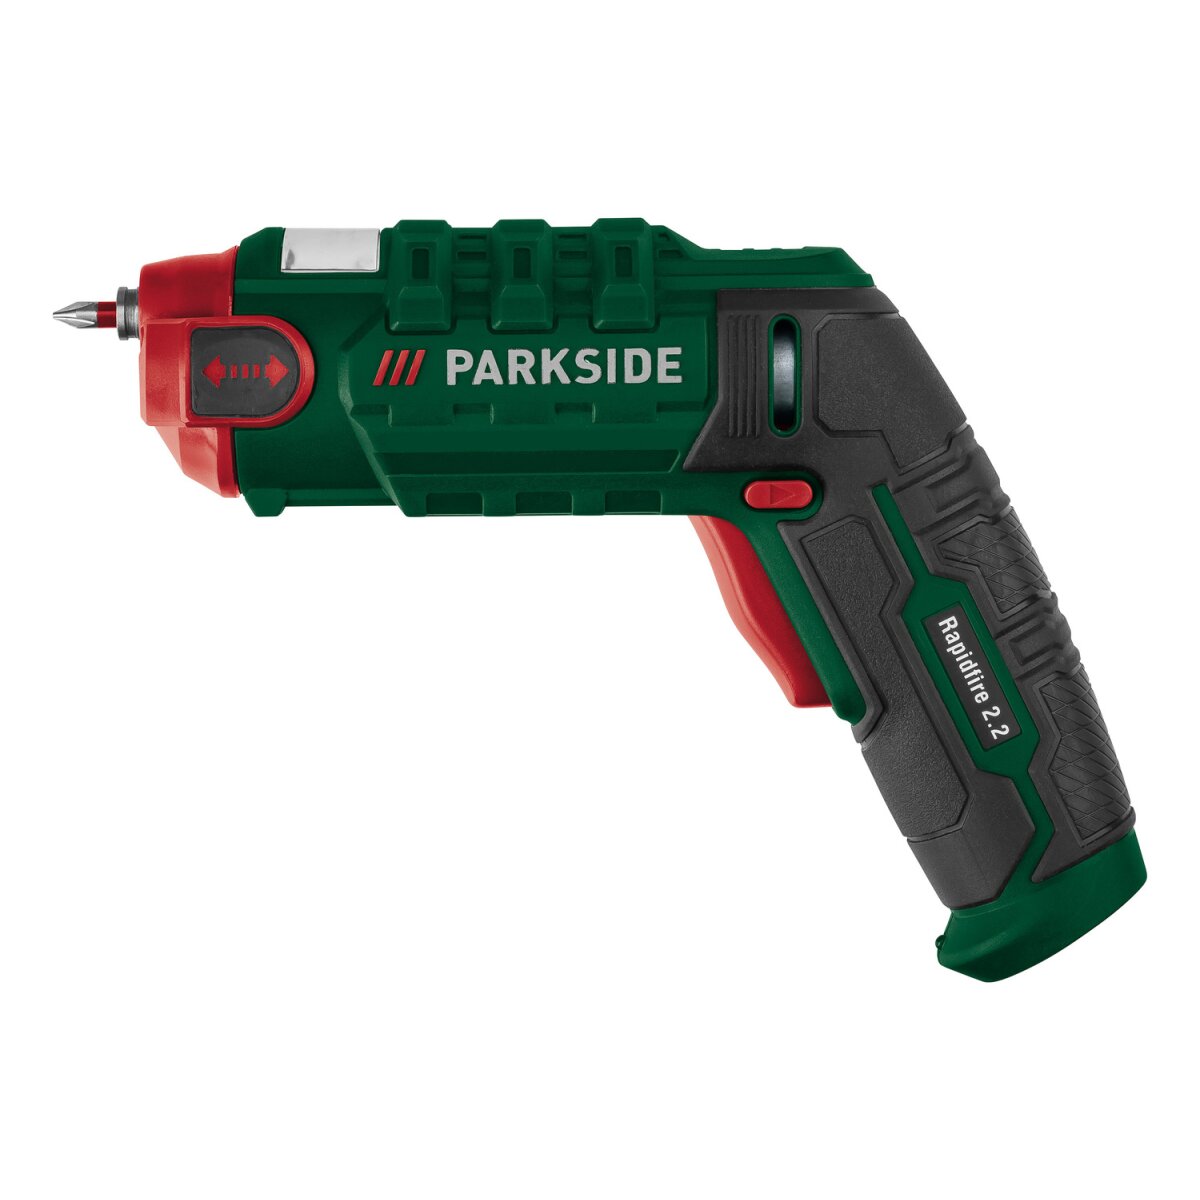 PARKSIDE® 4 V Akku-Wechselbitschrauber inkl. B-Ware - »Rapidfire sehr € gut, 2.2«, 16,99 Bitset